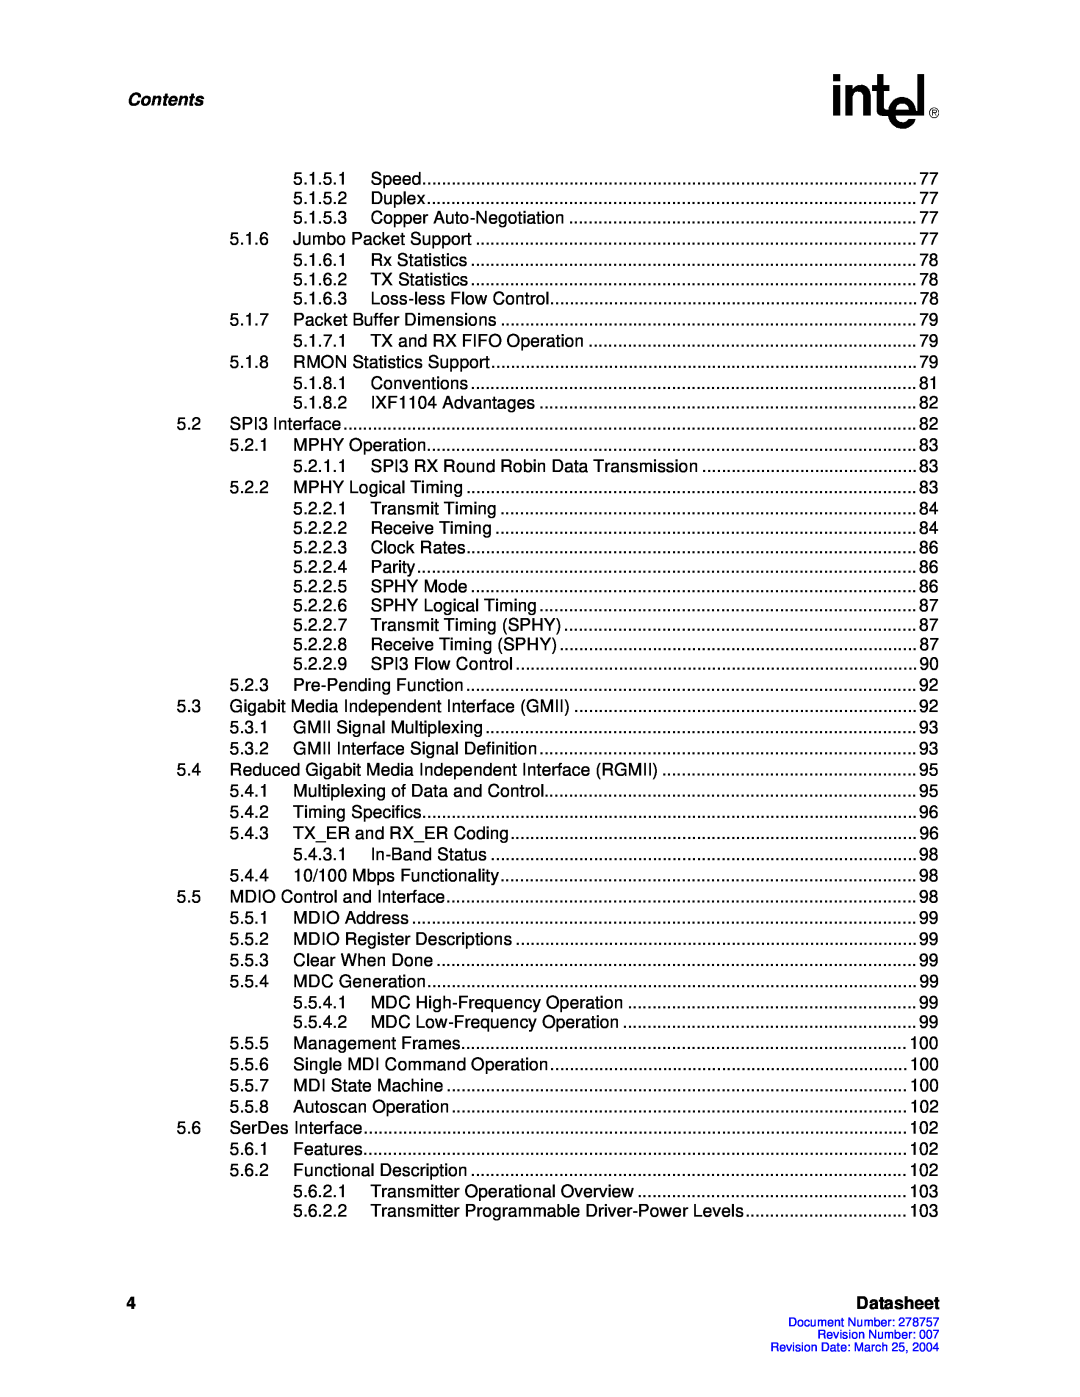 Intel IXF1104 manual Contents, Datasheet 